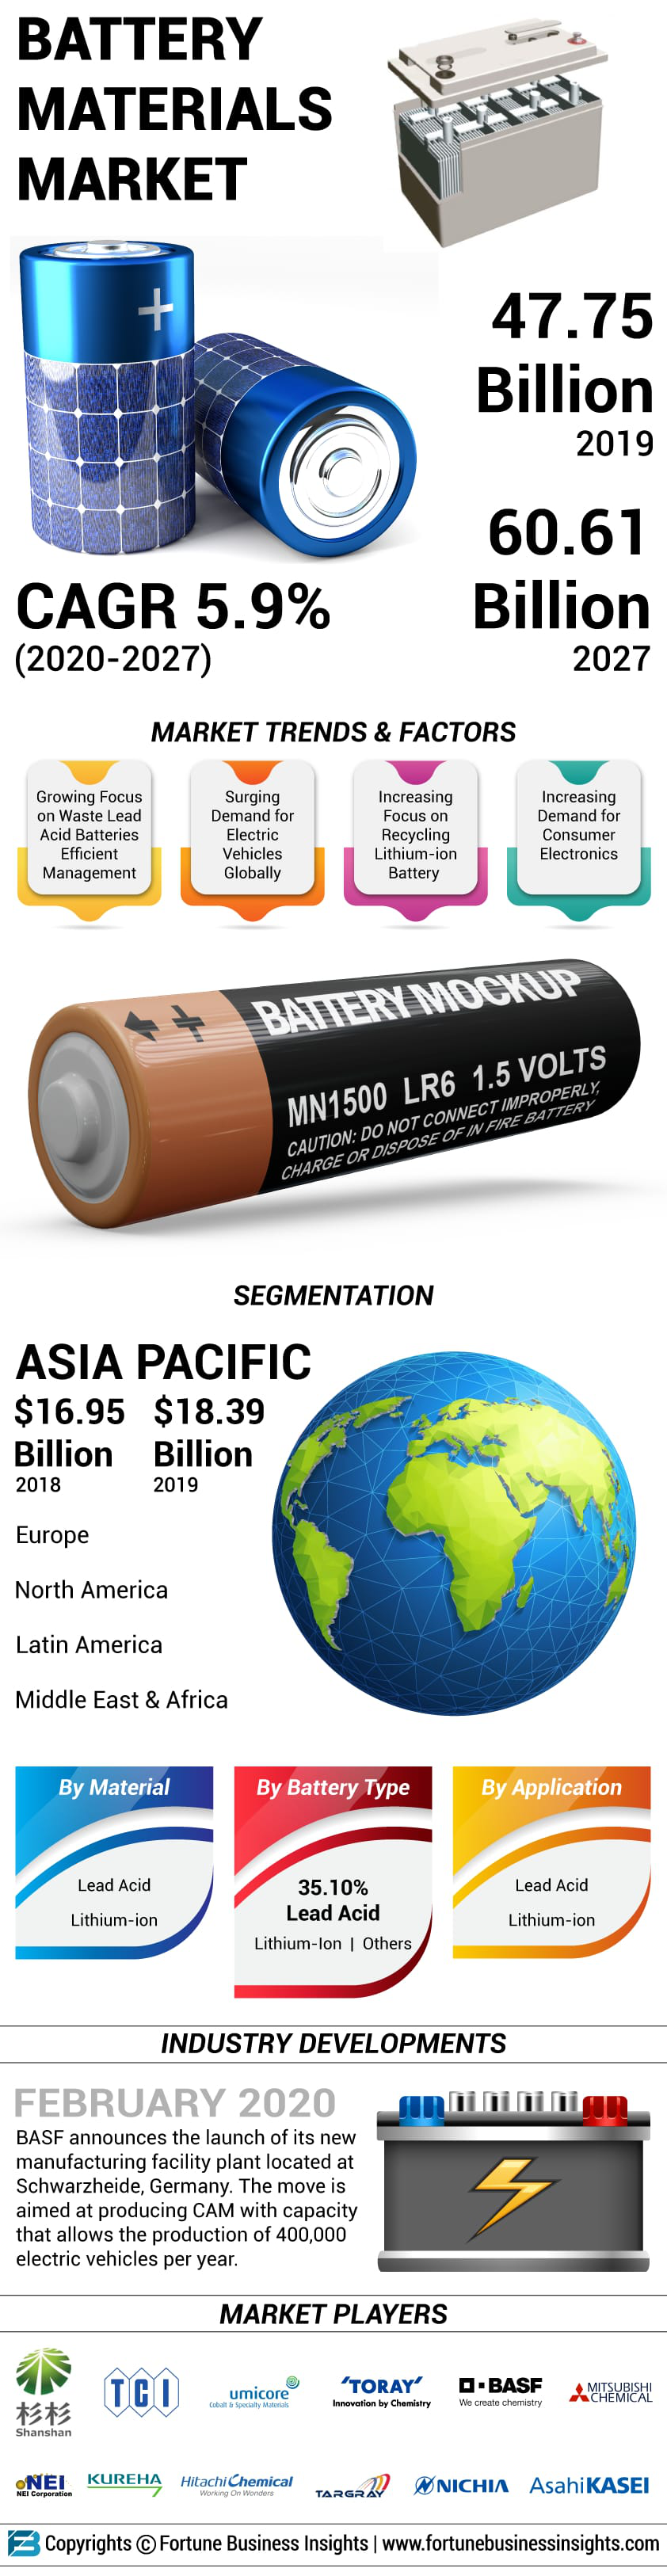 Battery Material Market